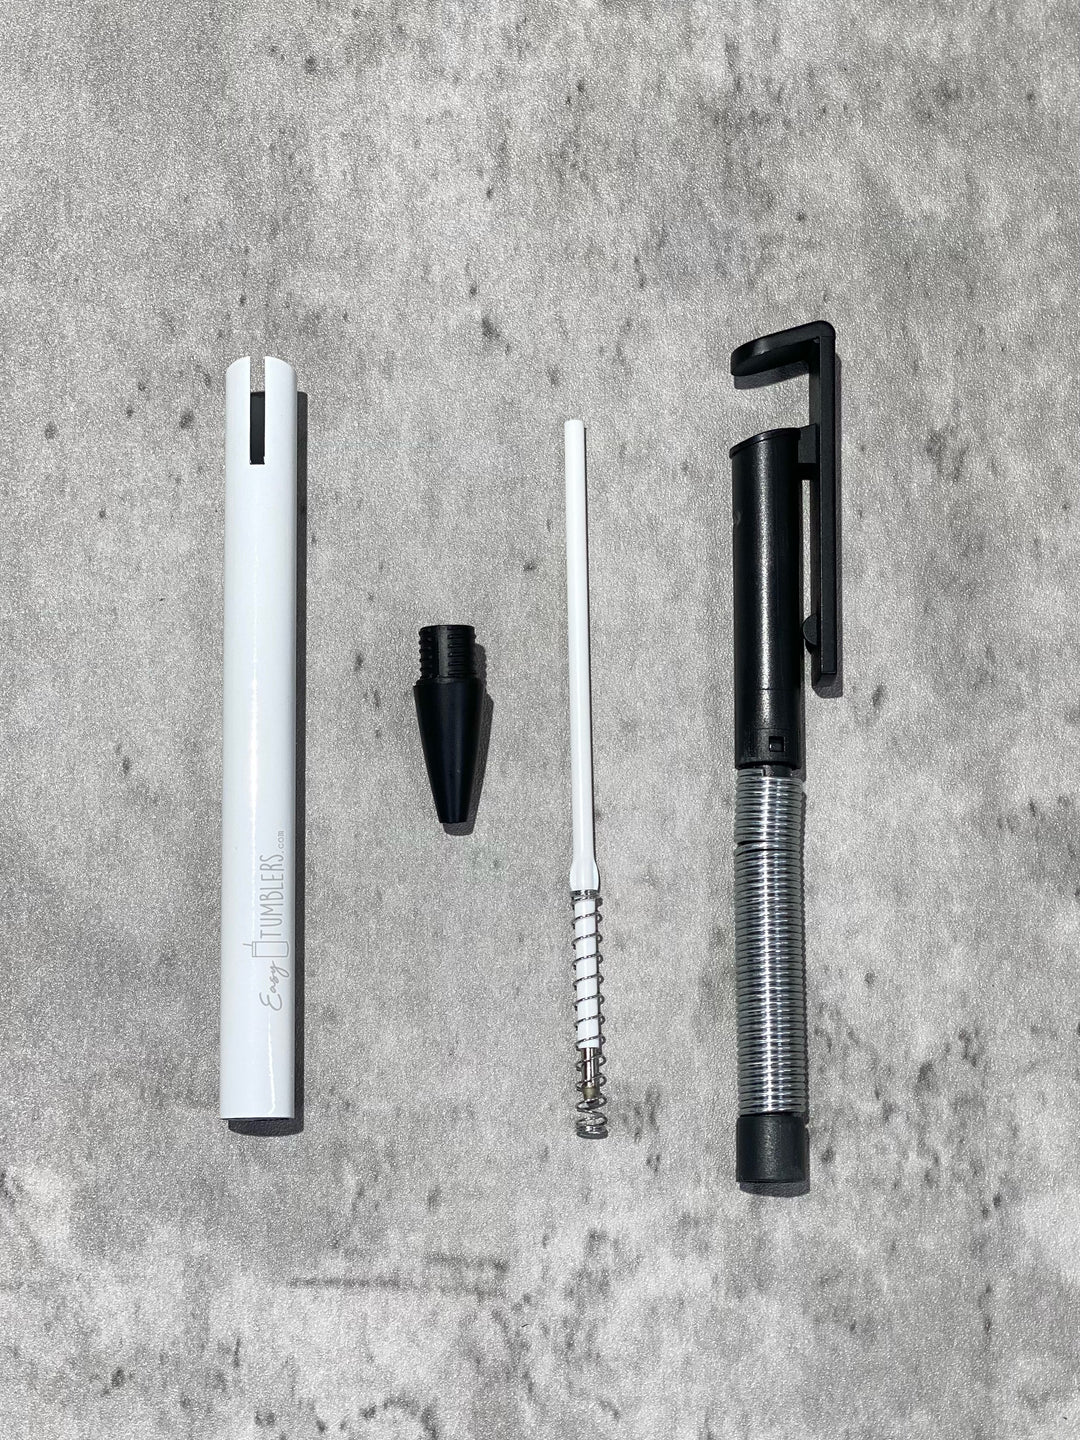 Sublimation Ballpoint stylus pens blank retractable twist black